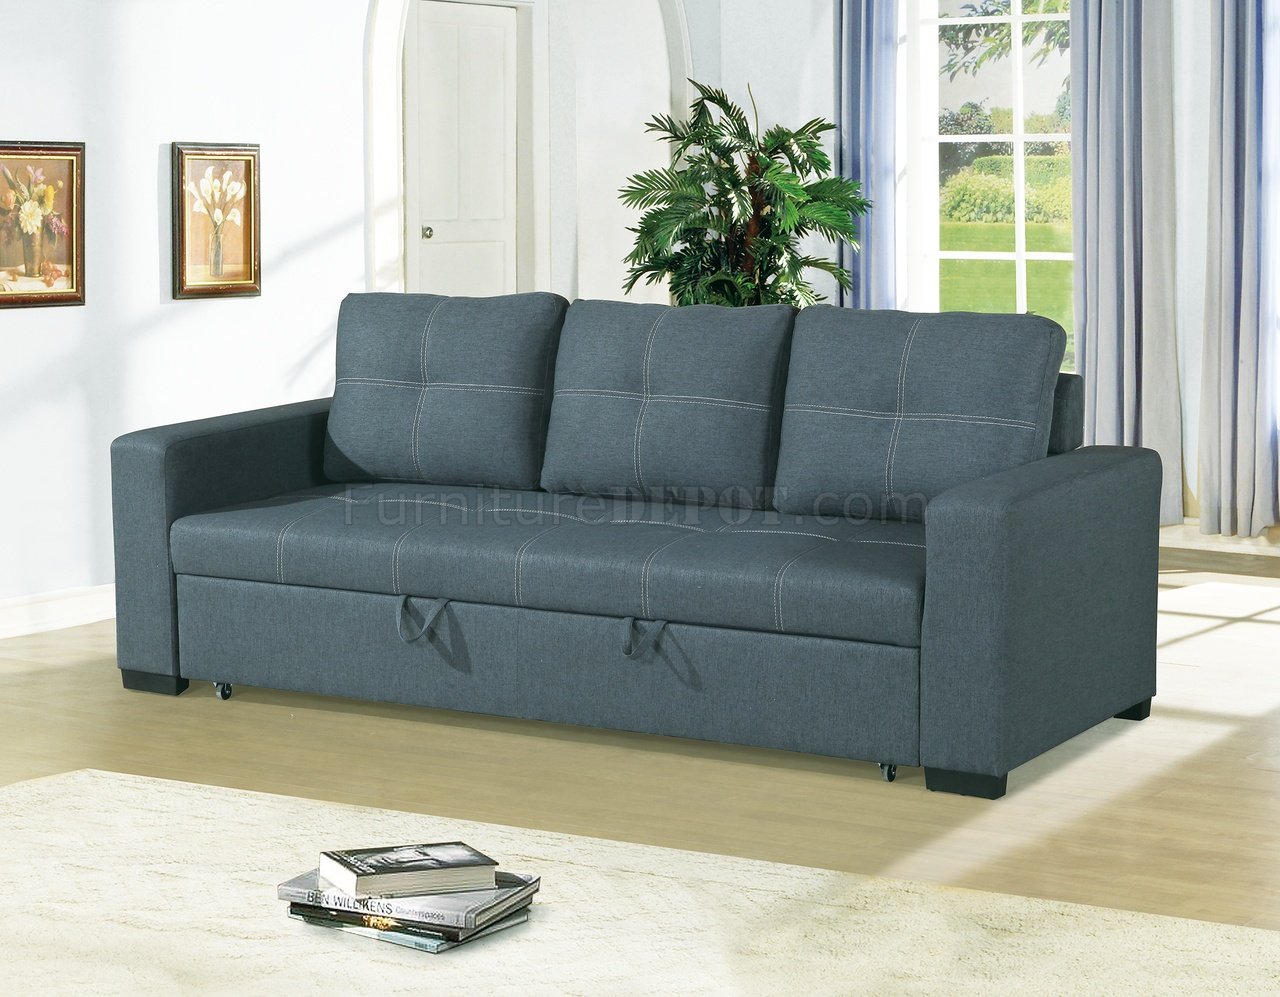 adeco fabric fiber sofa bed